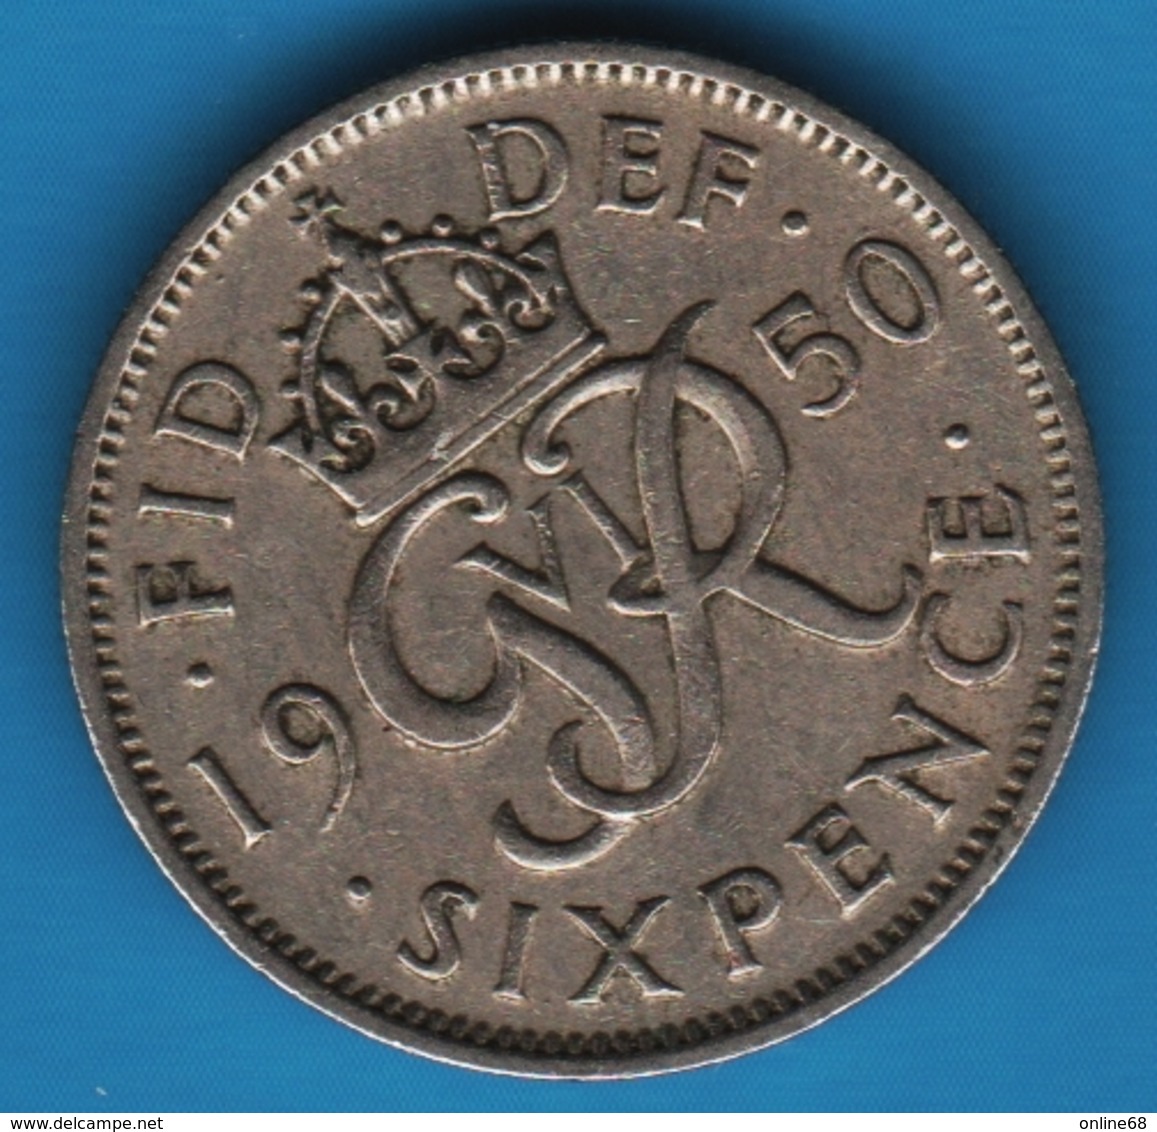 UK 6 PENCE 1950 KM# 875 George VI - H. 6 Pence